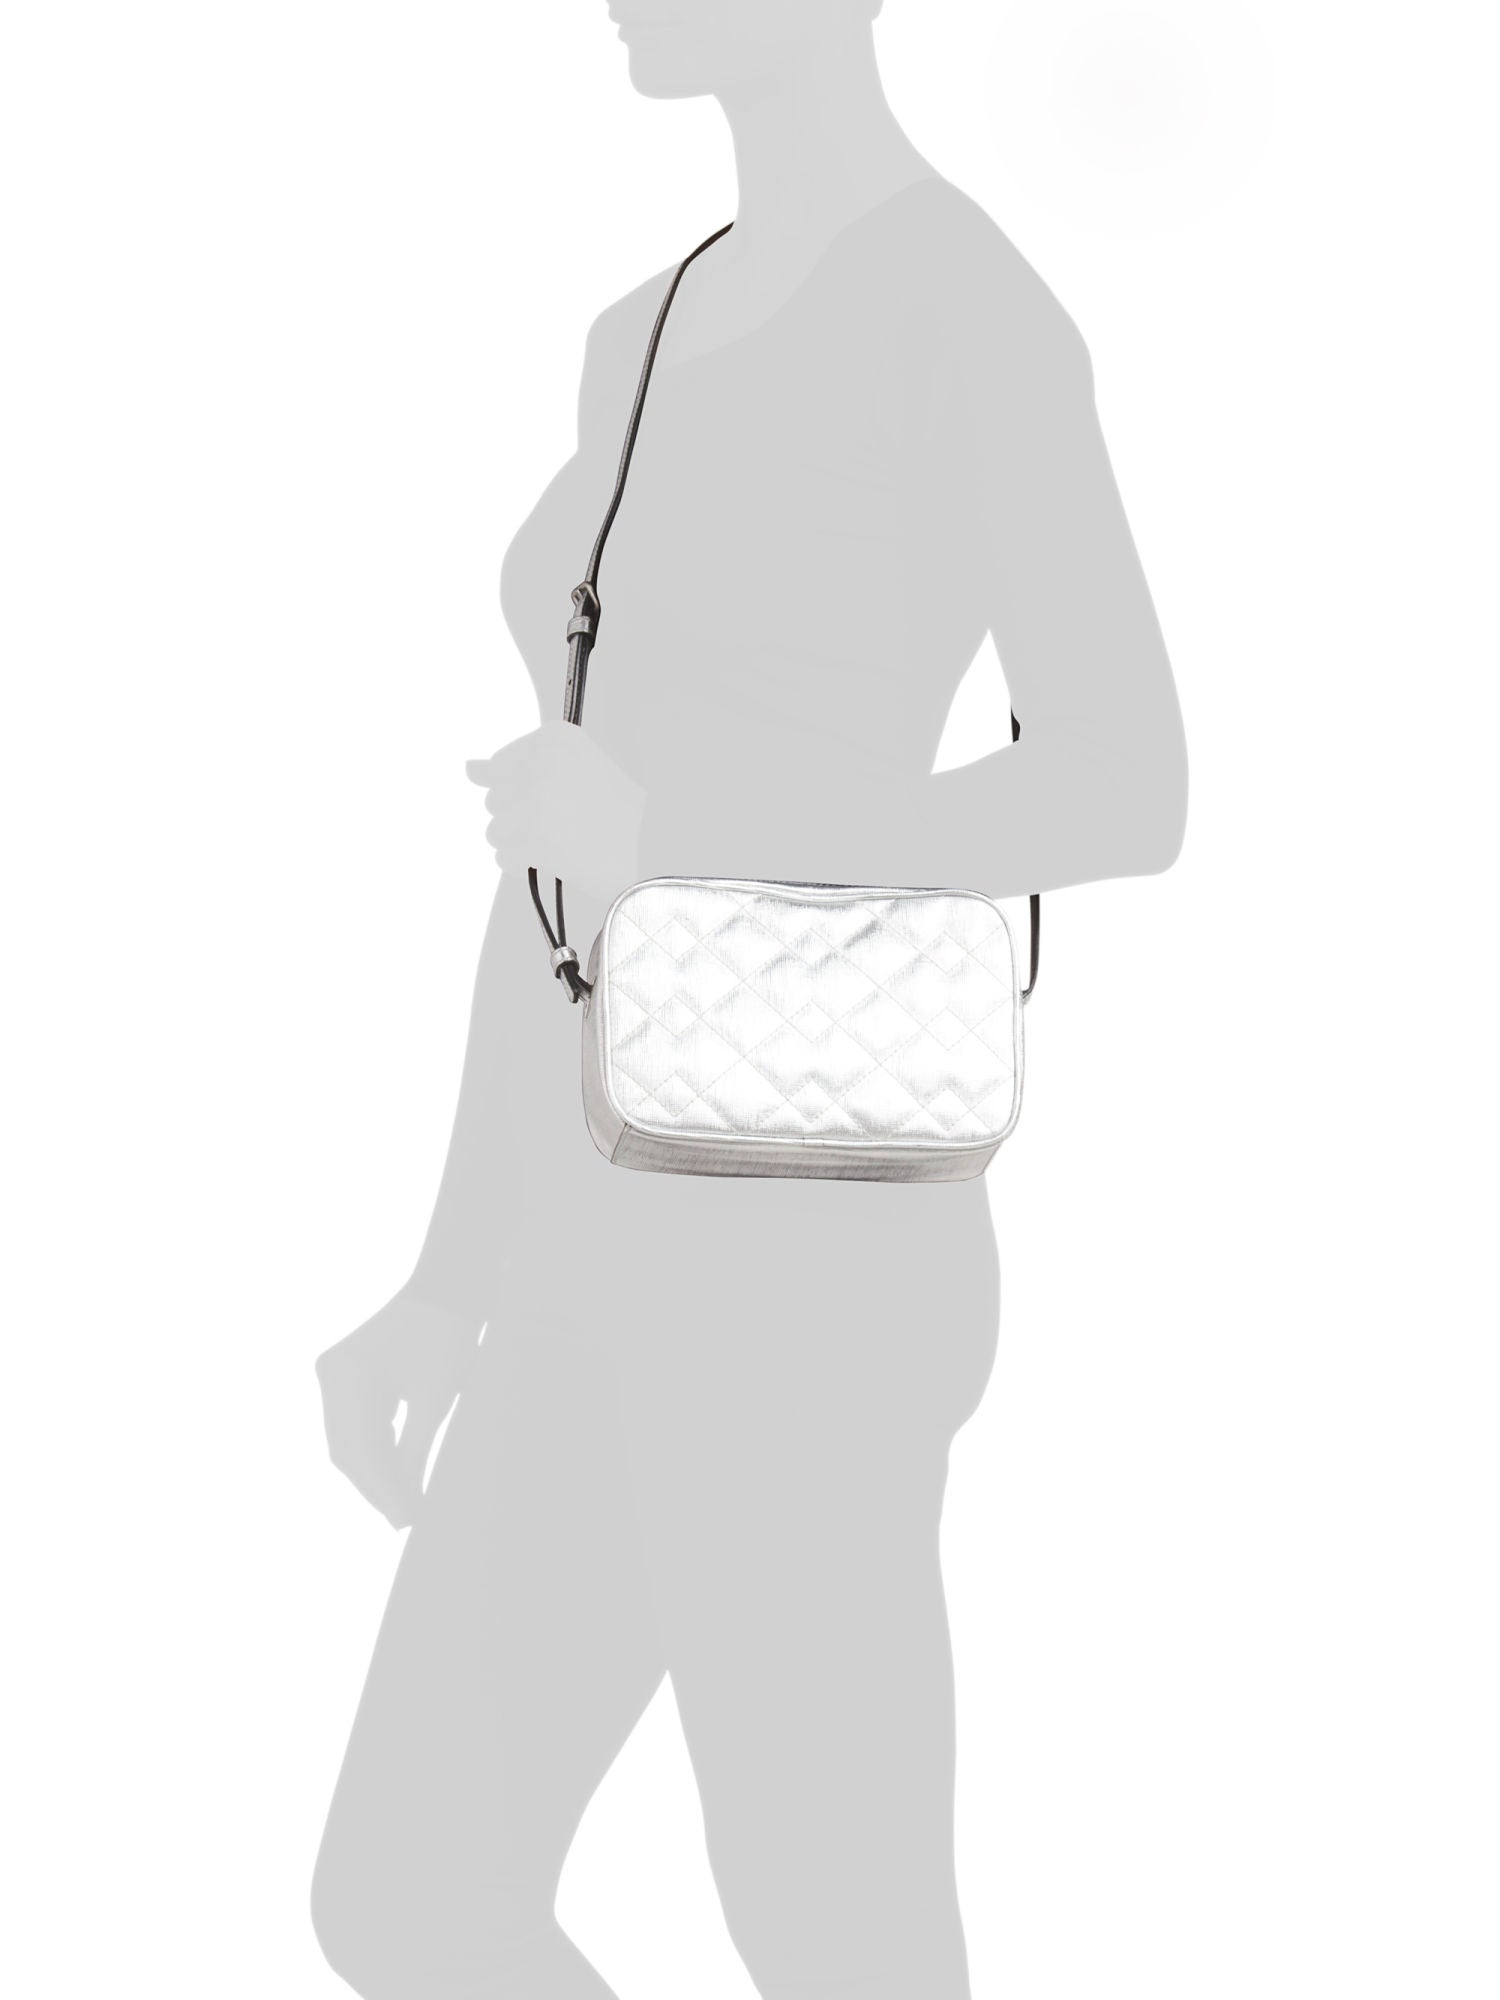 Marc Jacobs Sway Metallic Whipstitch Crossbody Bag